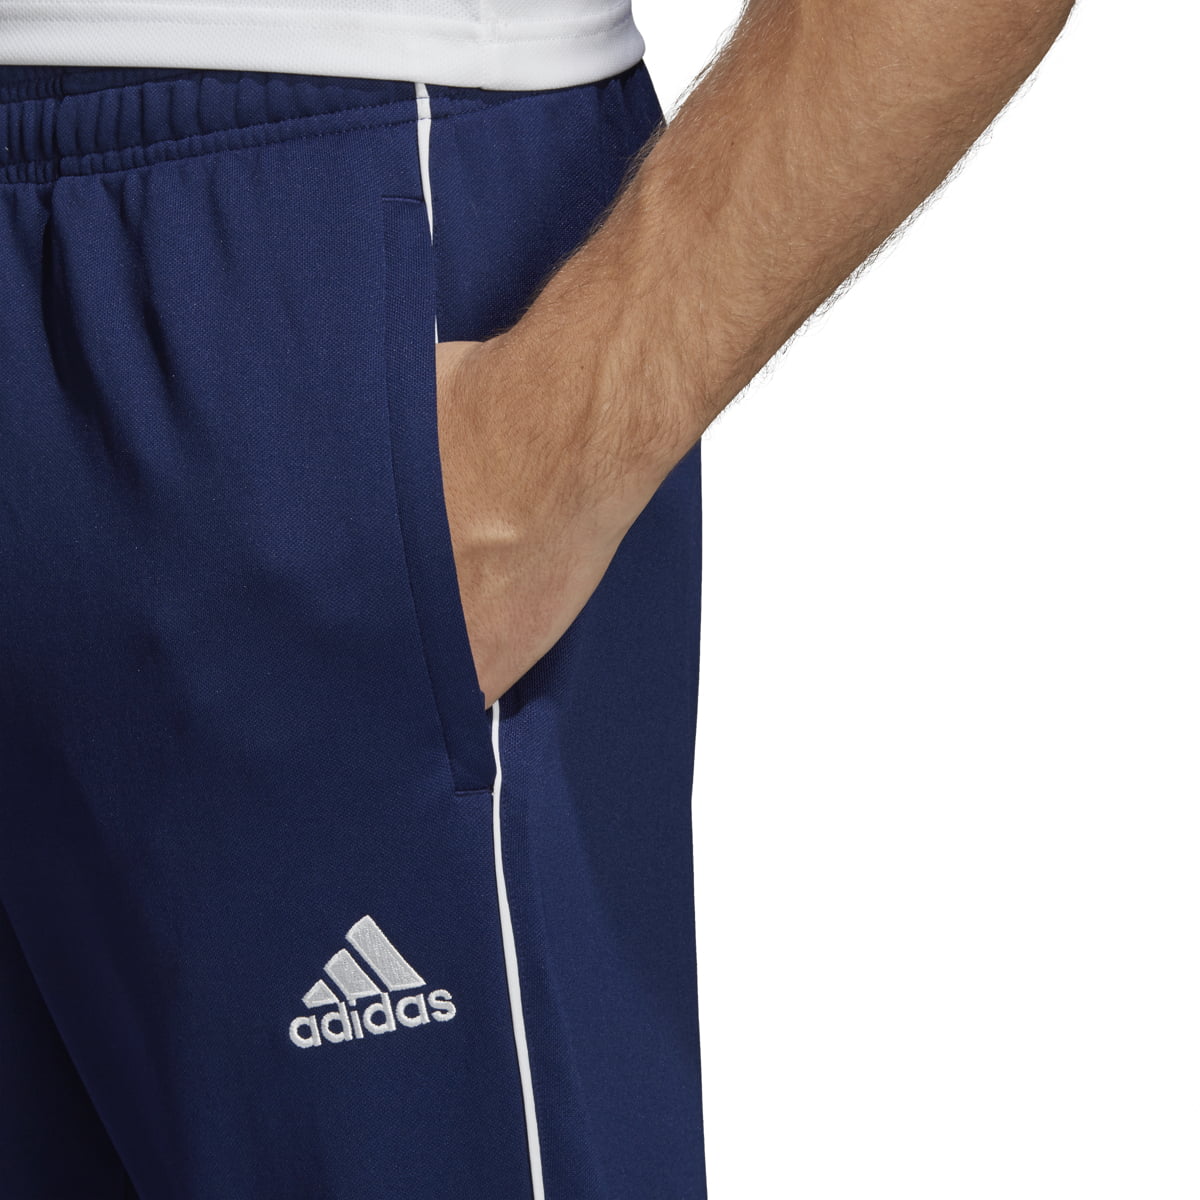 activity Quagmire hijack Adidas - adidas Mens Core 18 Training Pants - Walmart.com - Walmart.com